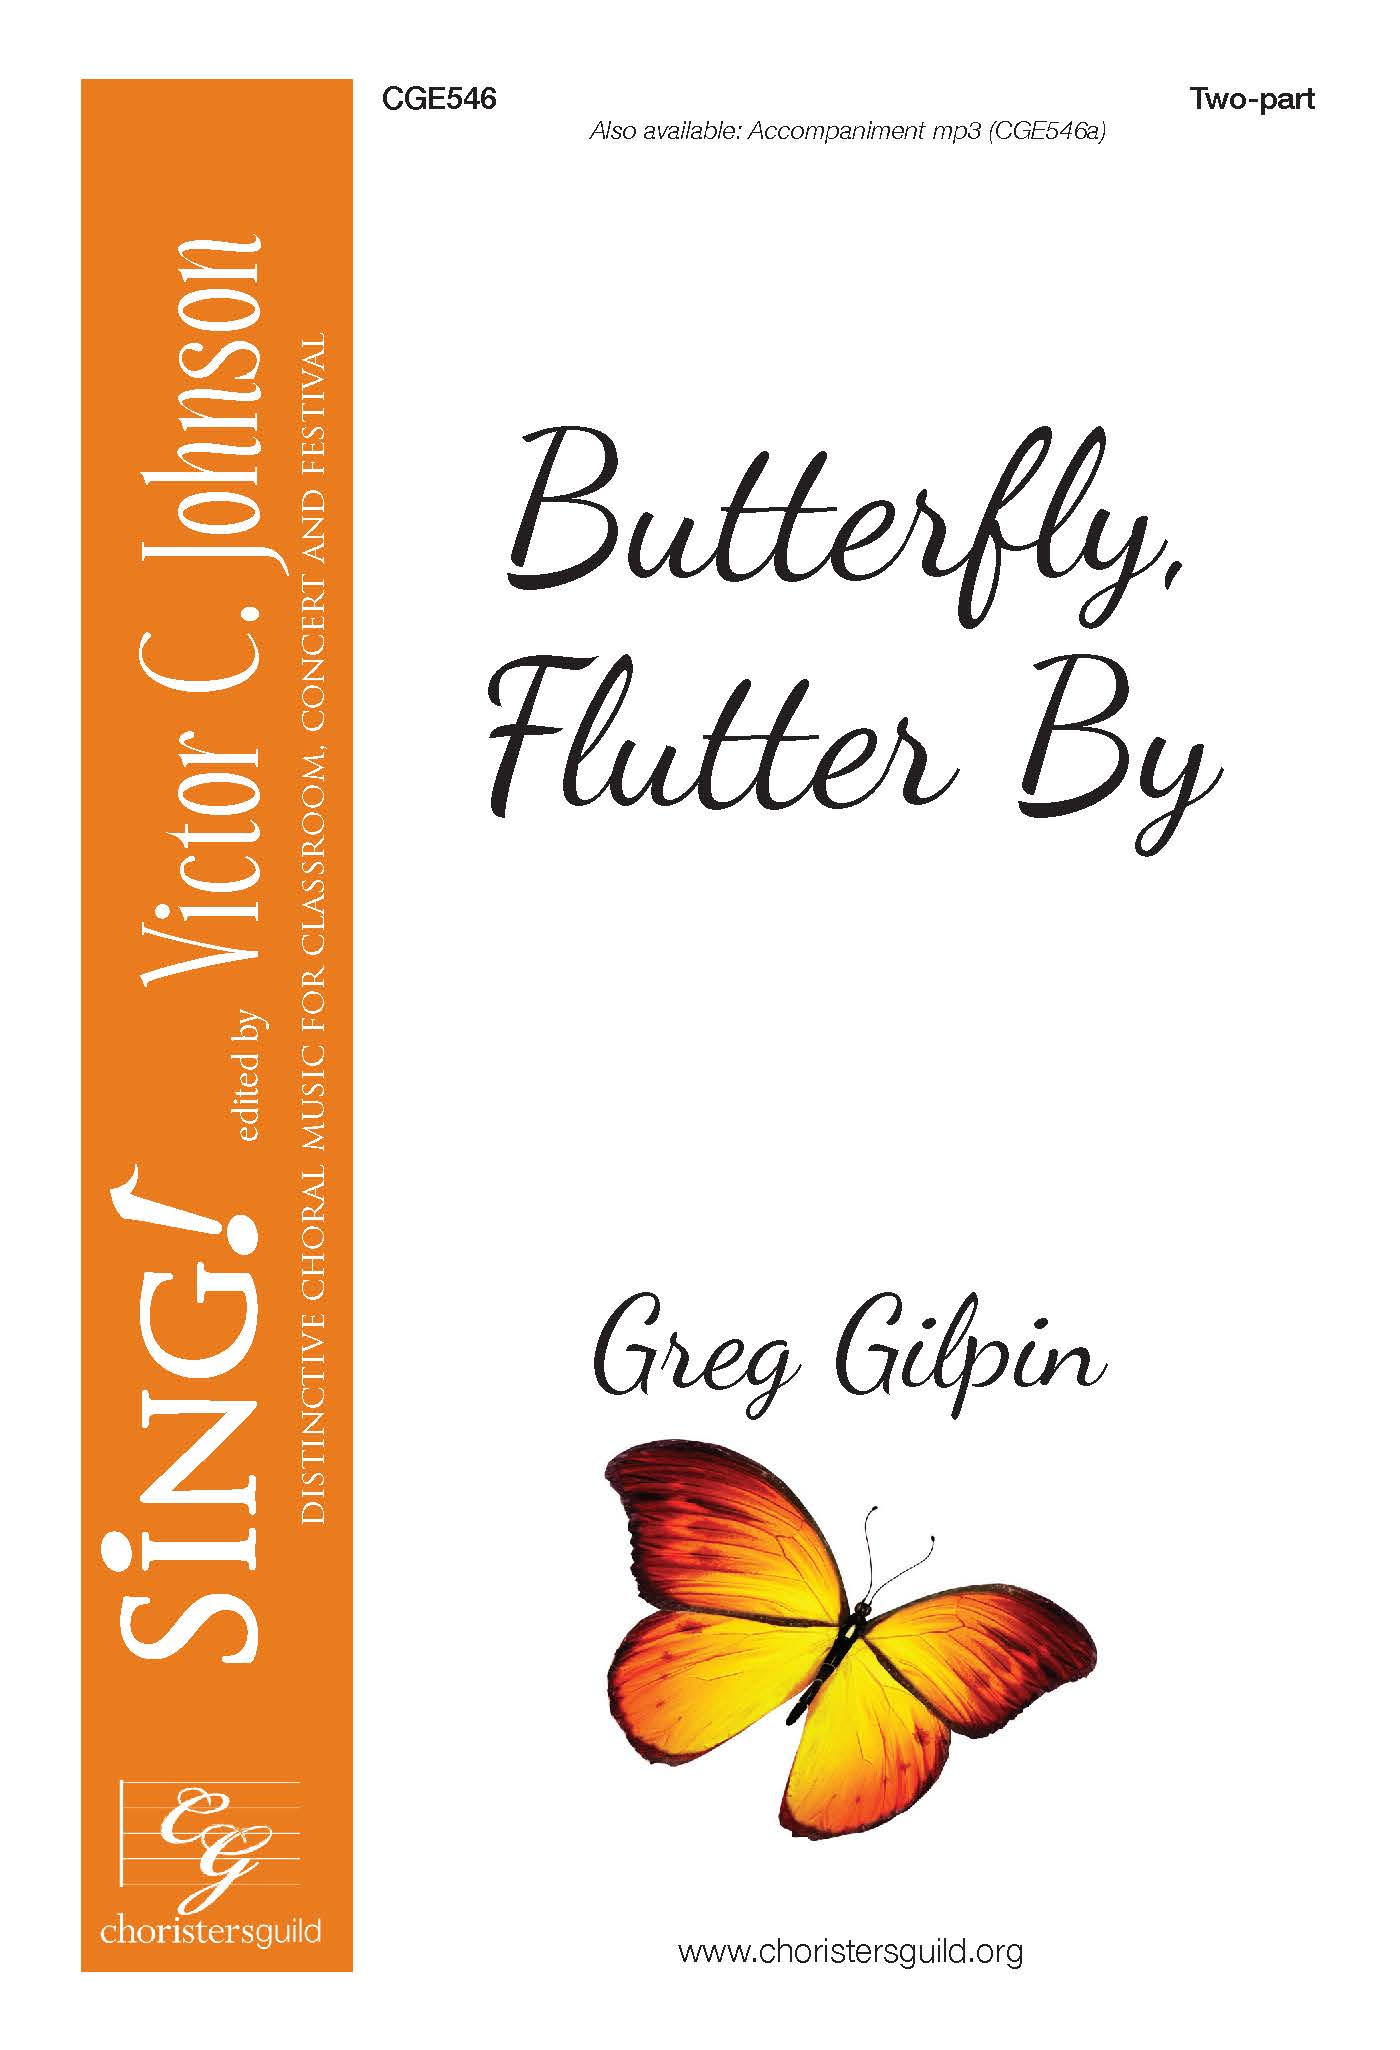 Butterfly, Flutter - Two-part